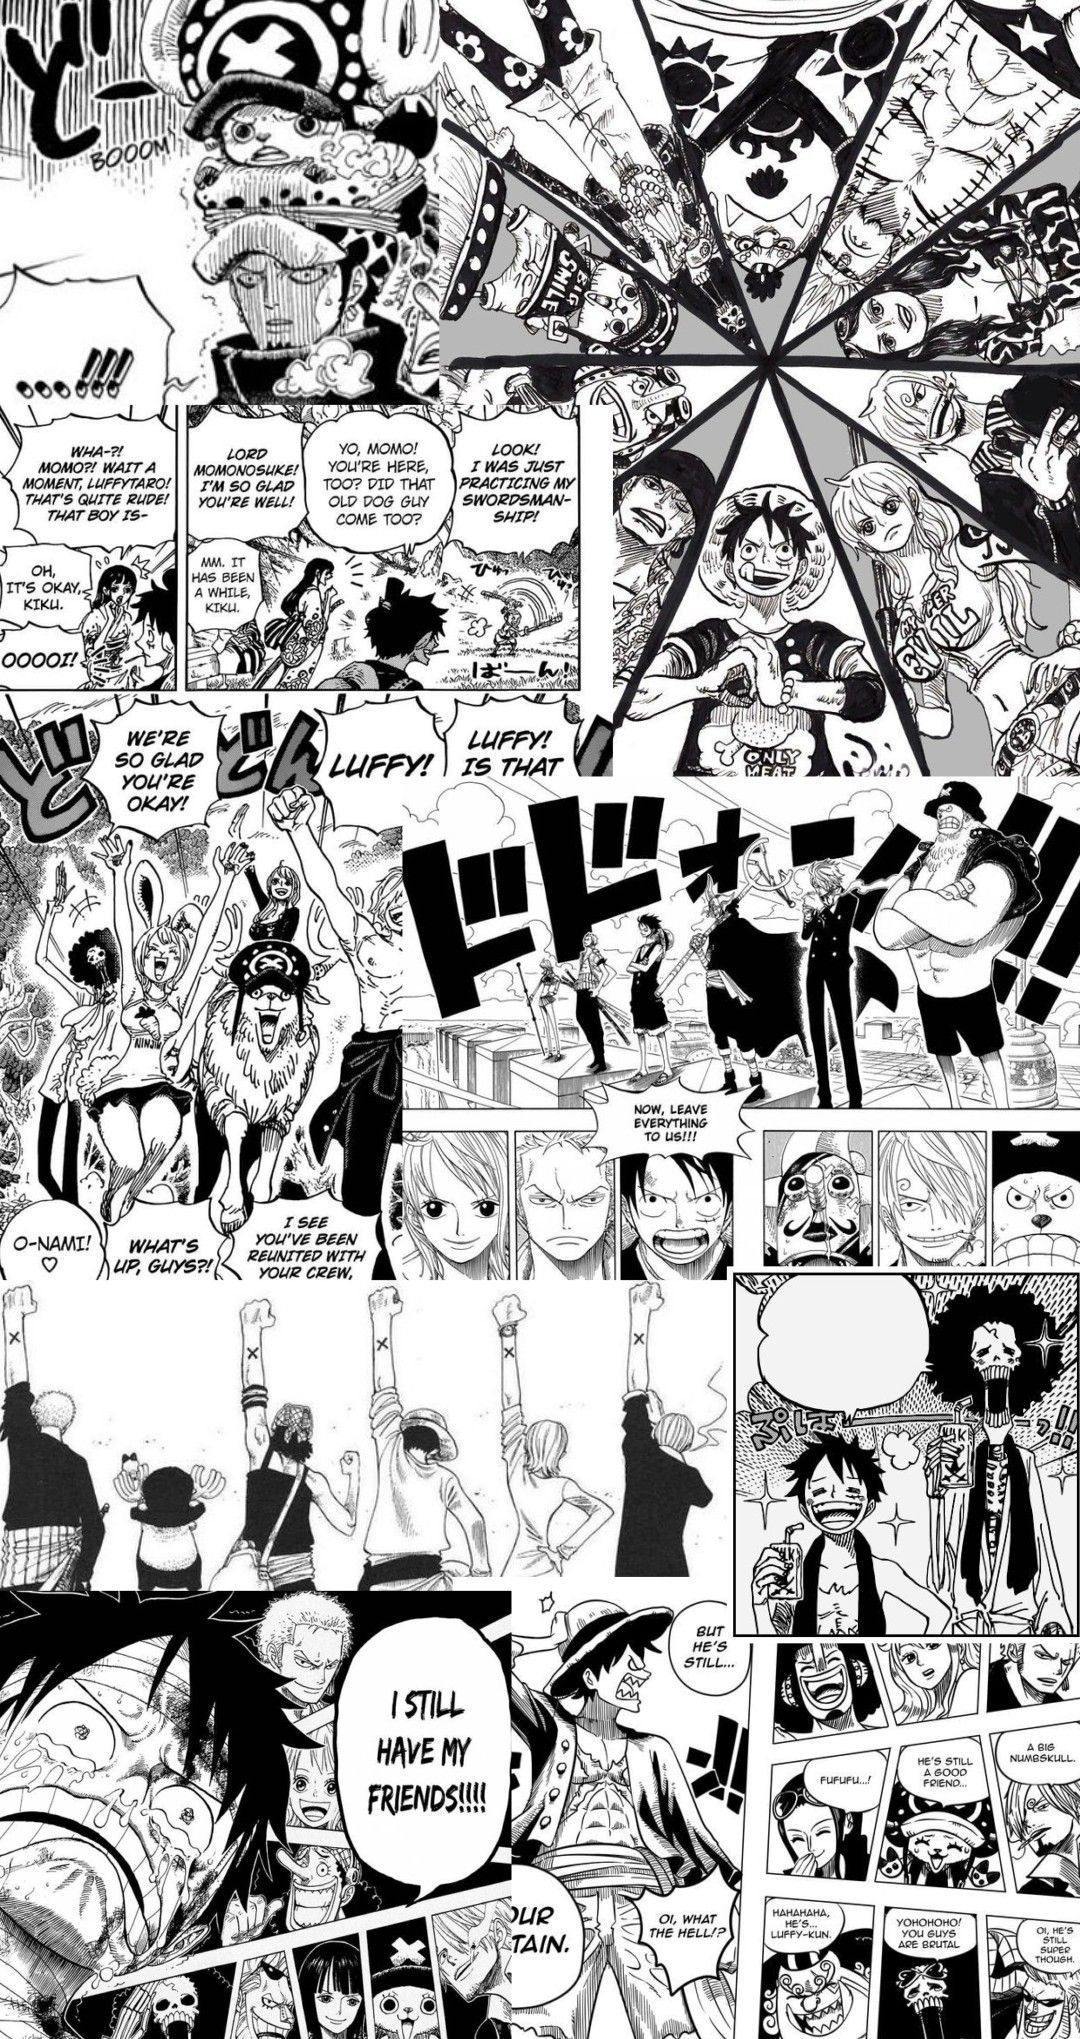 Manga Panel One Piece Wallpapers Top Free Manga Panel One Piece Backgrounds Wallpaperaccess 9640